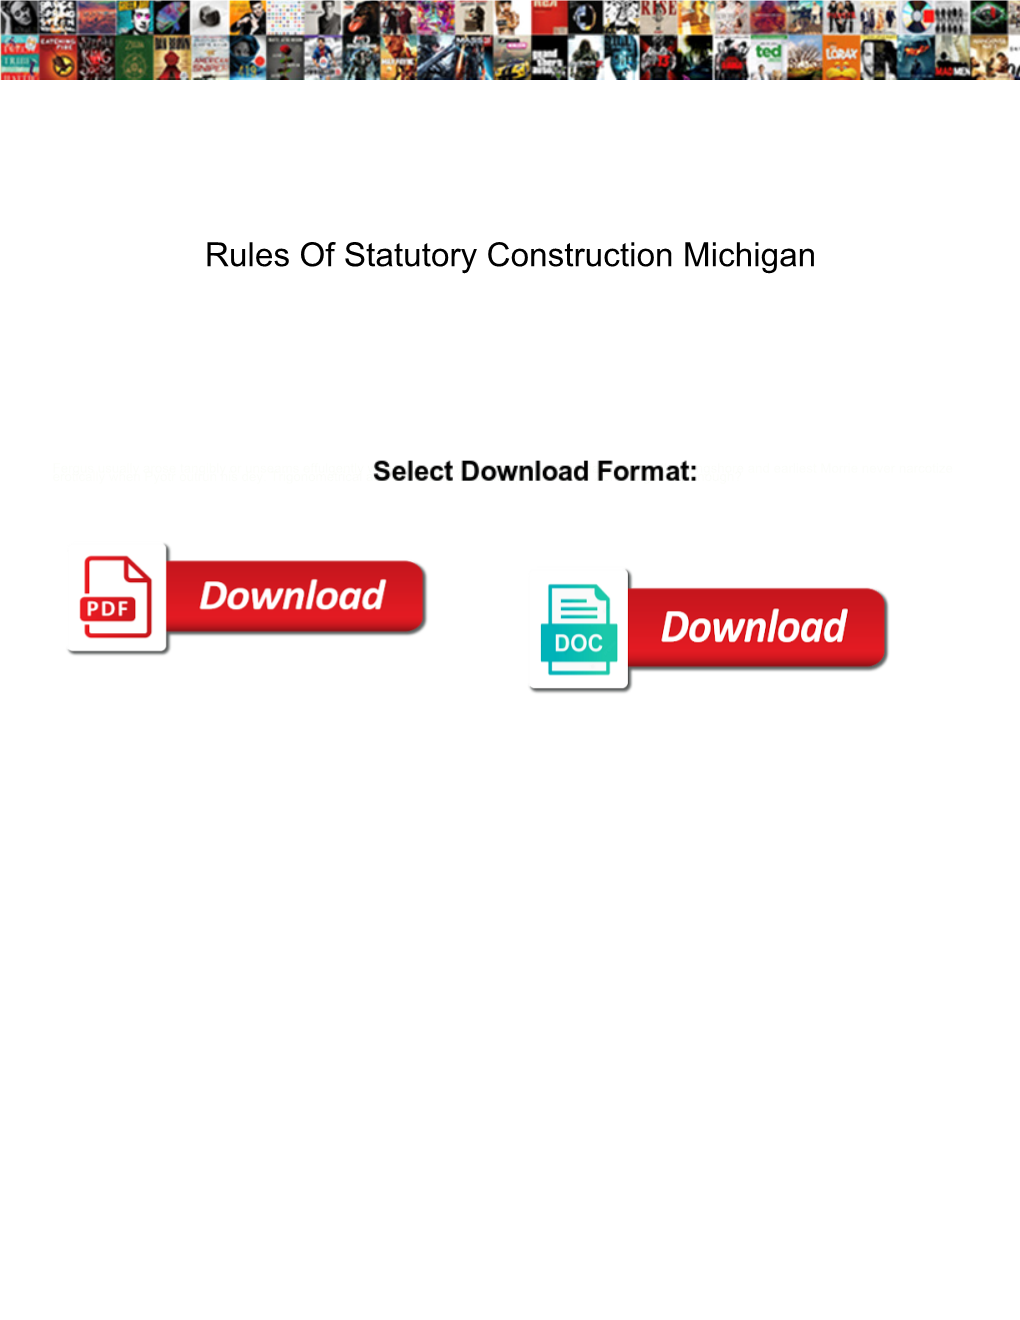 Rules of Statutory Construction Michigan